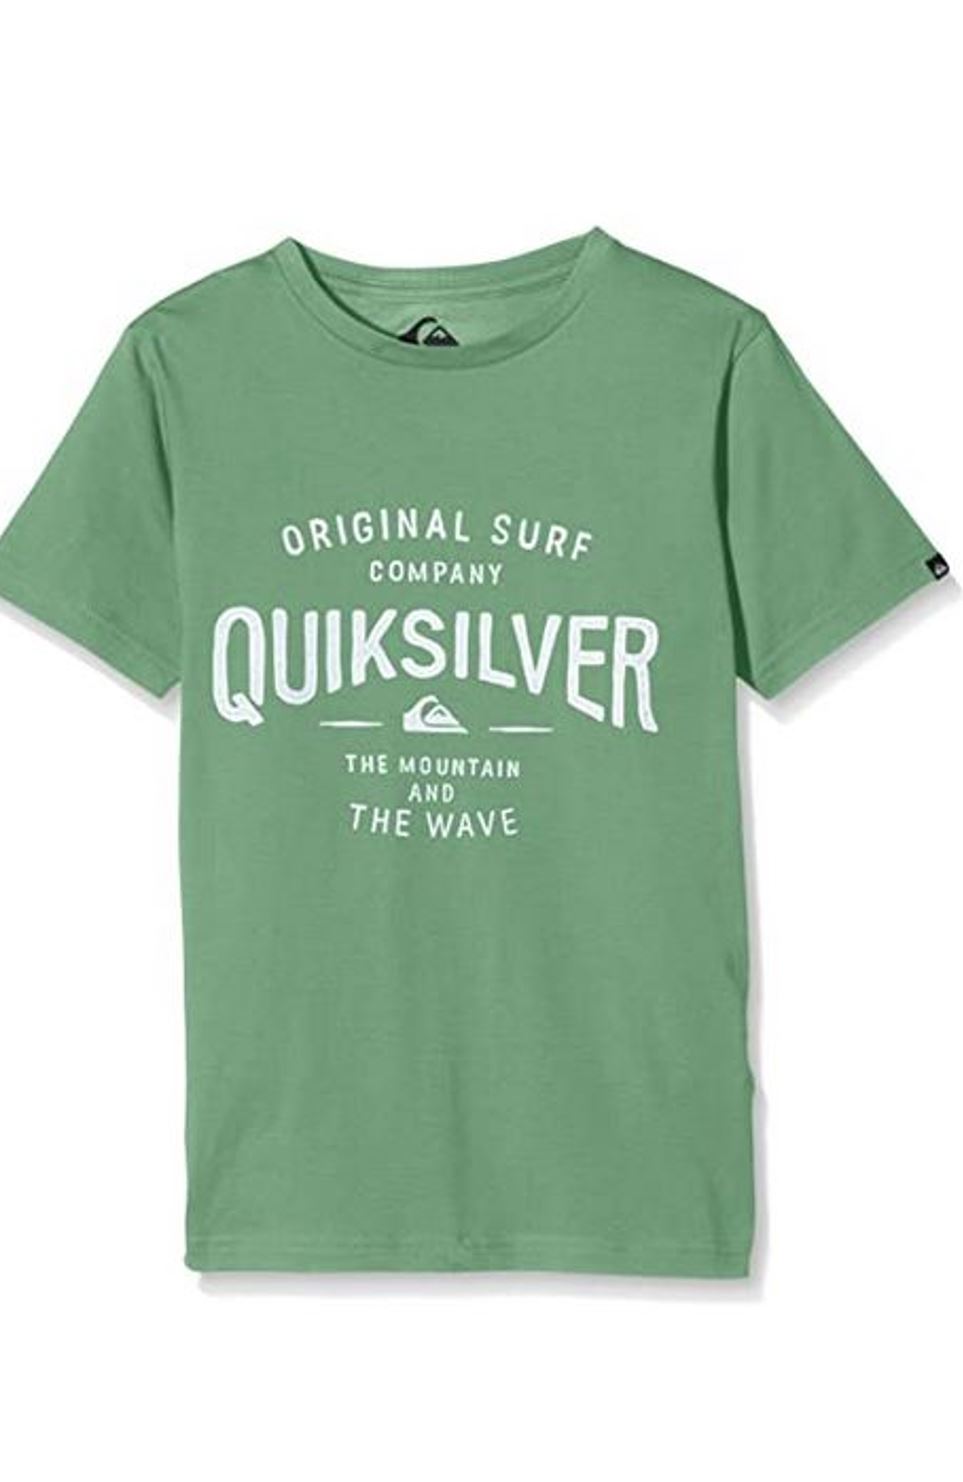 Quiksilver Kinder T-Shirt Claim grün